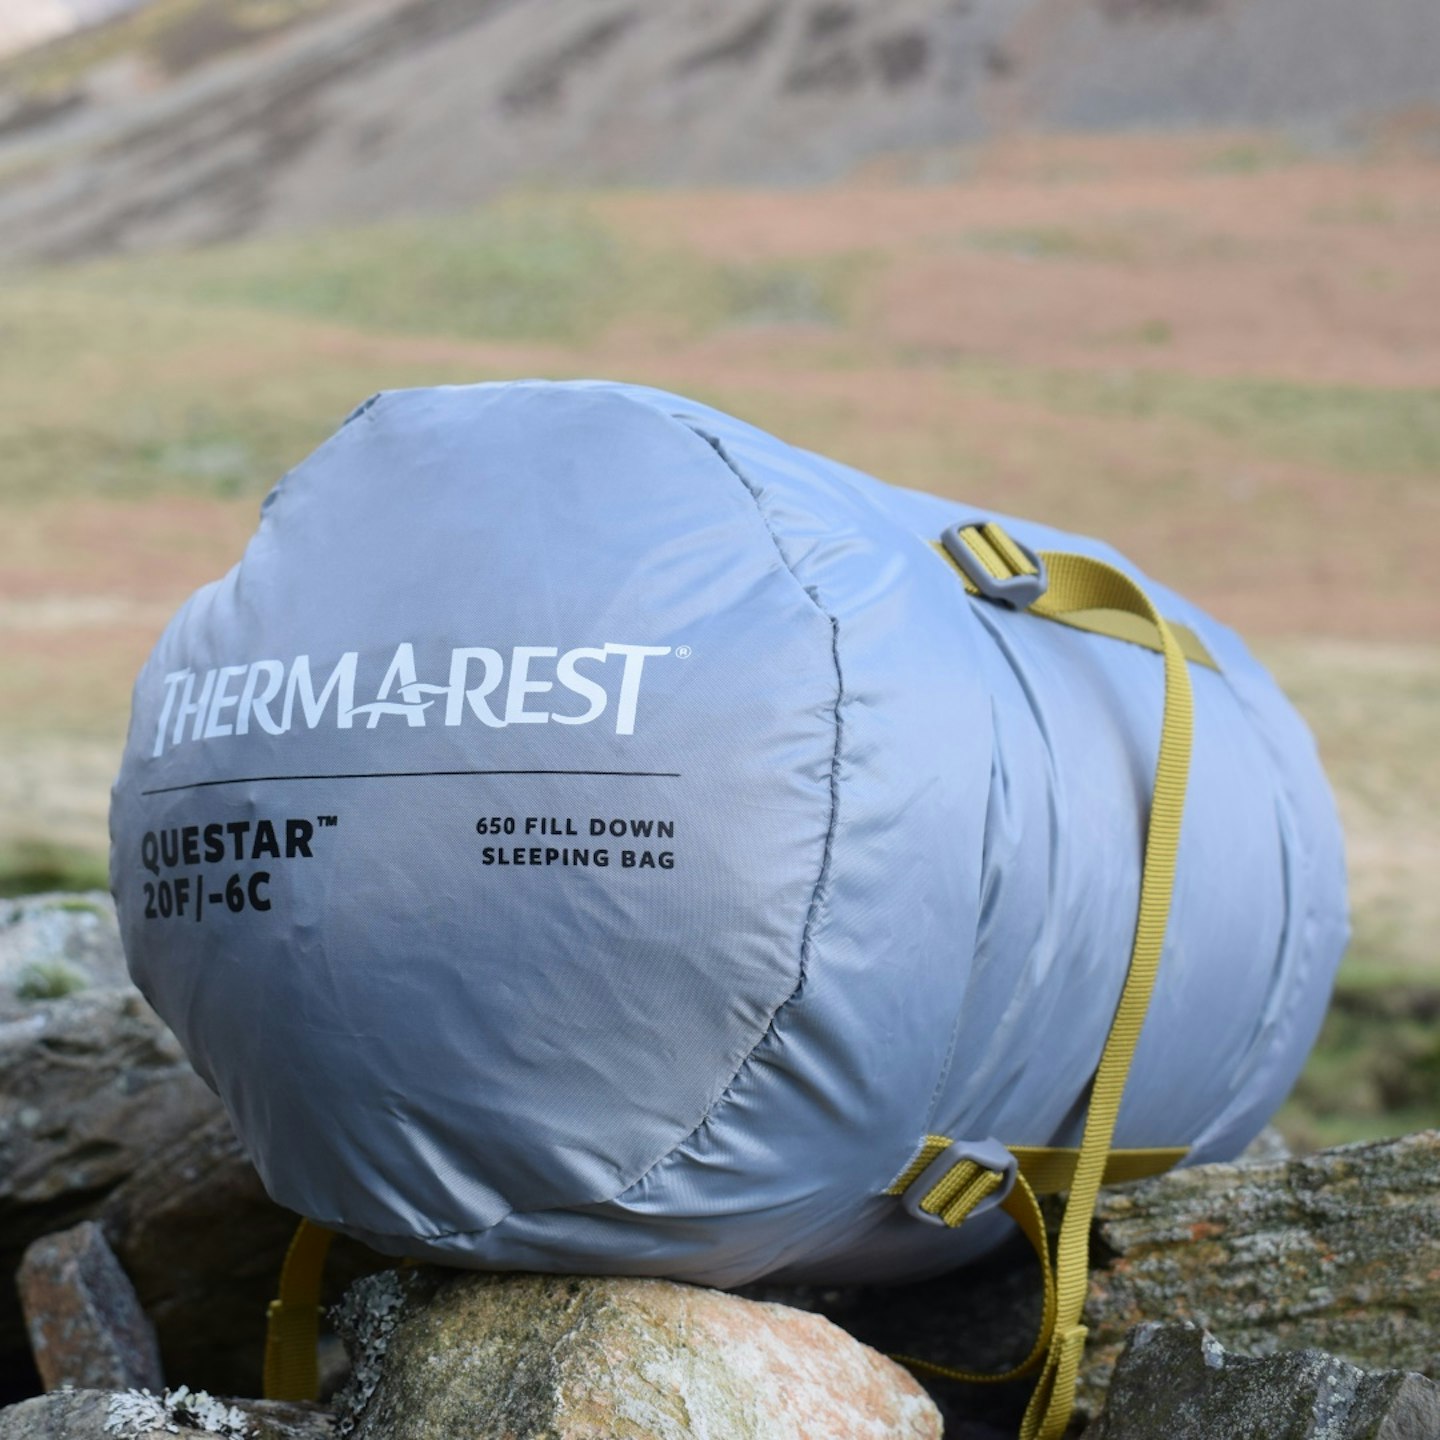 Therm-a-Rest Questar 20F/-6C Down Sleeping Bag in stuff sack